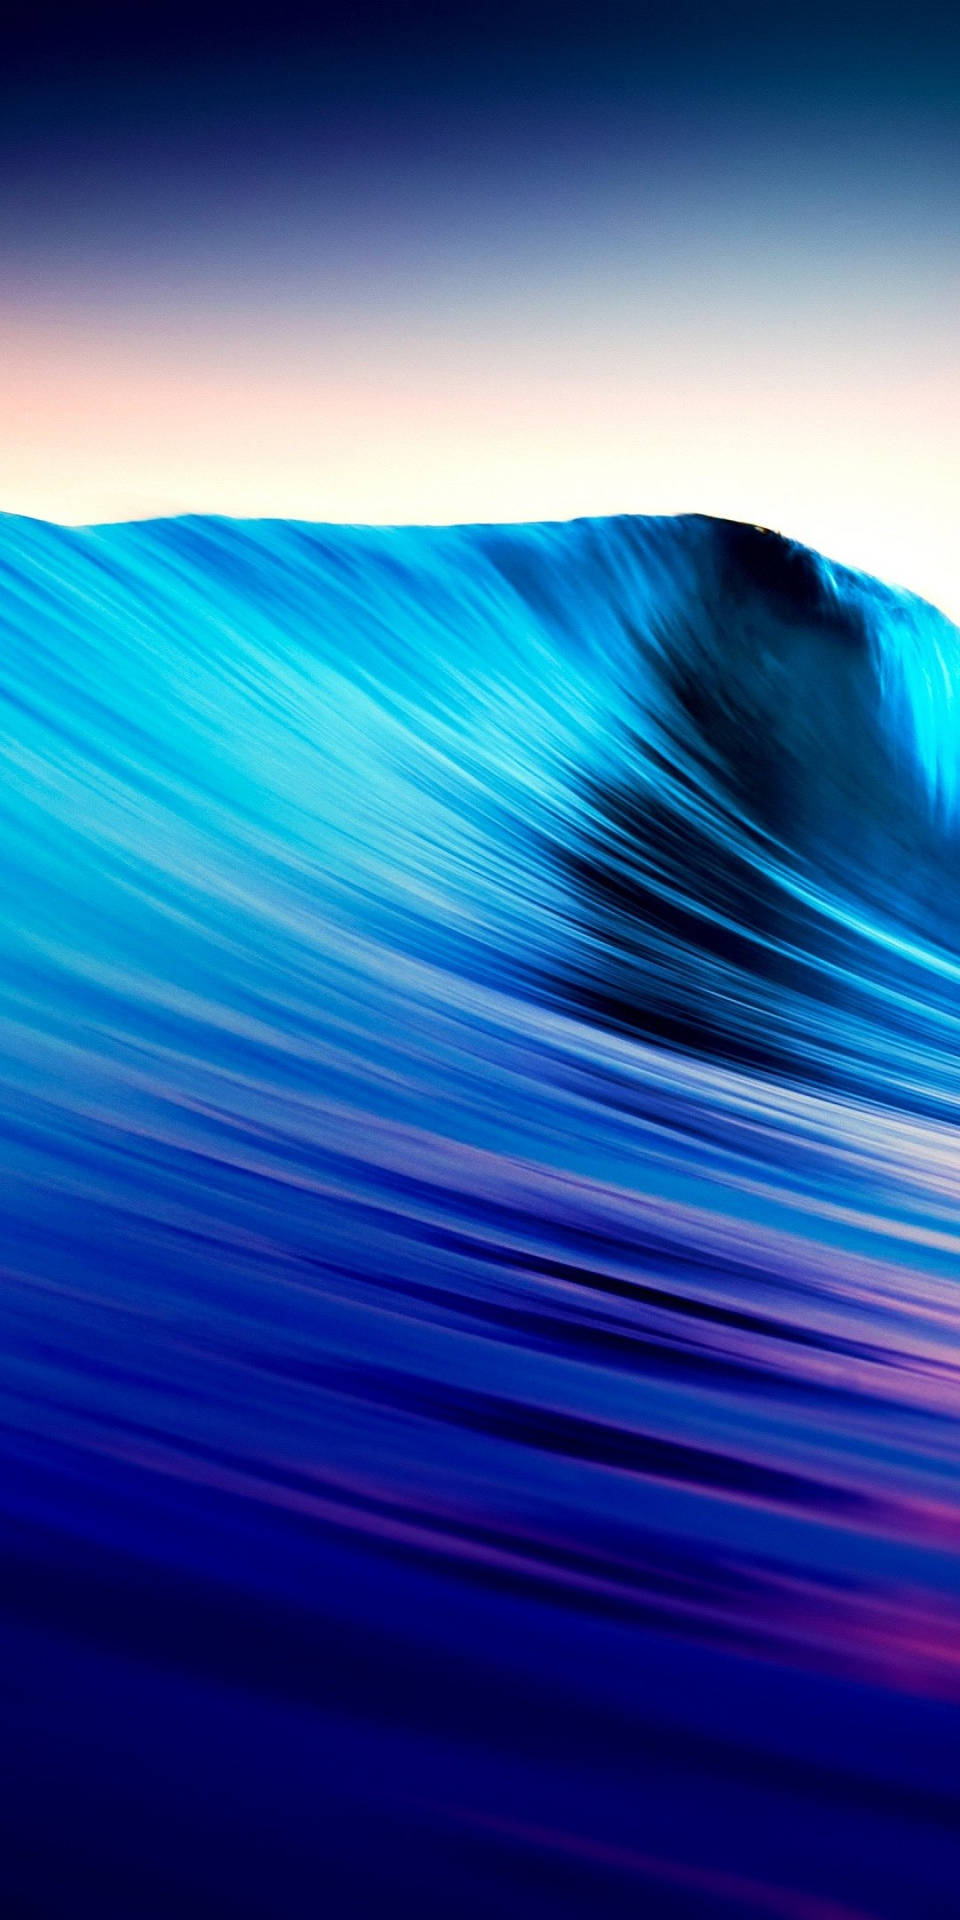 Samsung Galaxy J7 Blue Wave-like Pattern Wallpaper